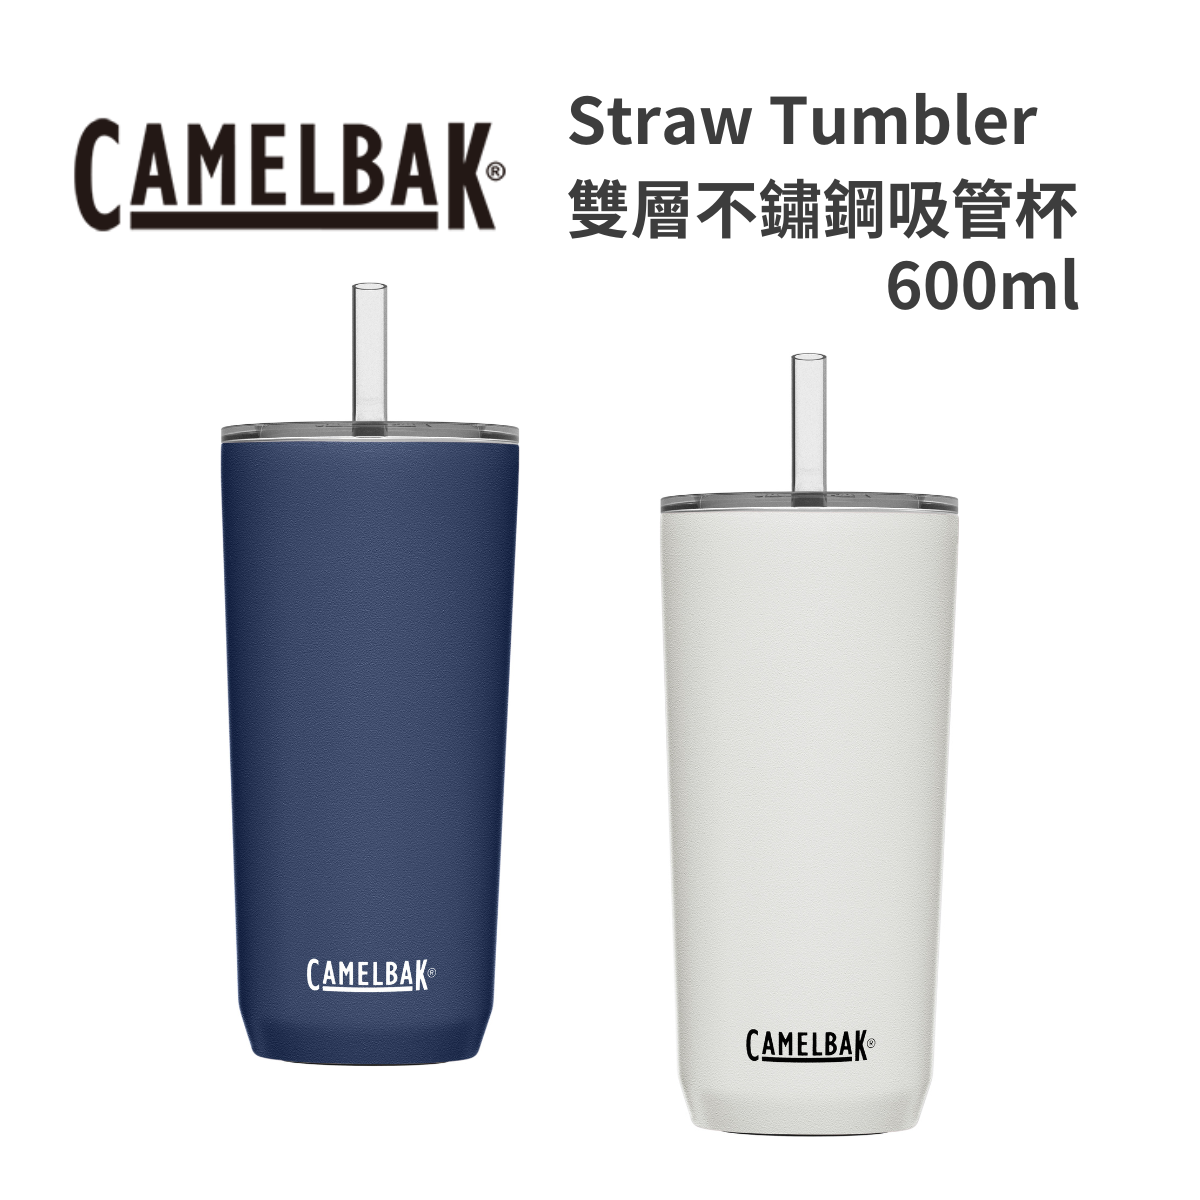 【Camelbak】Straw Tumbler 雙層不鏽鋼吸管保溫杯 600ml